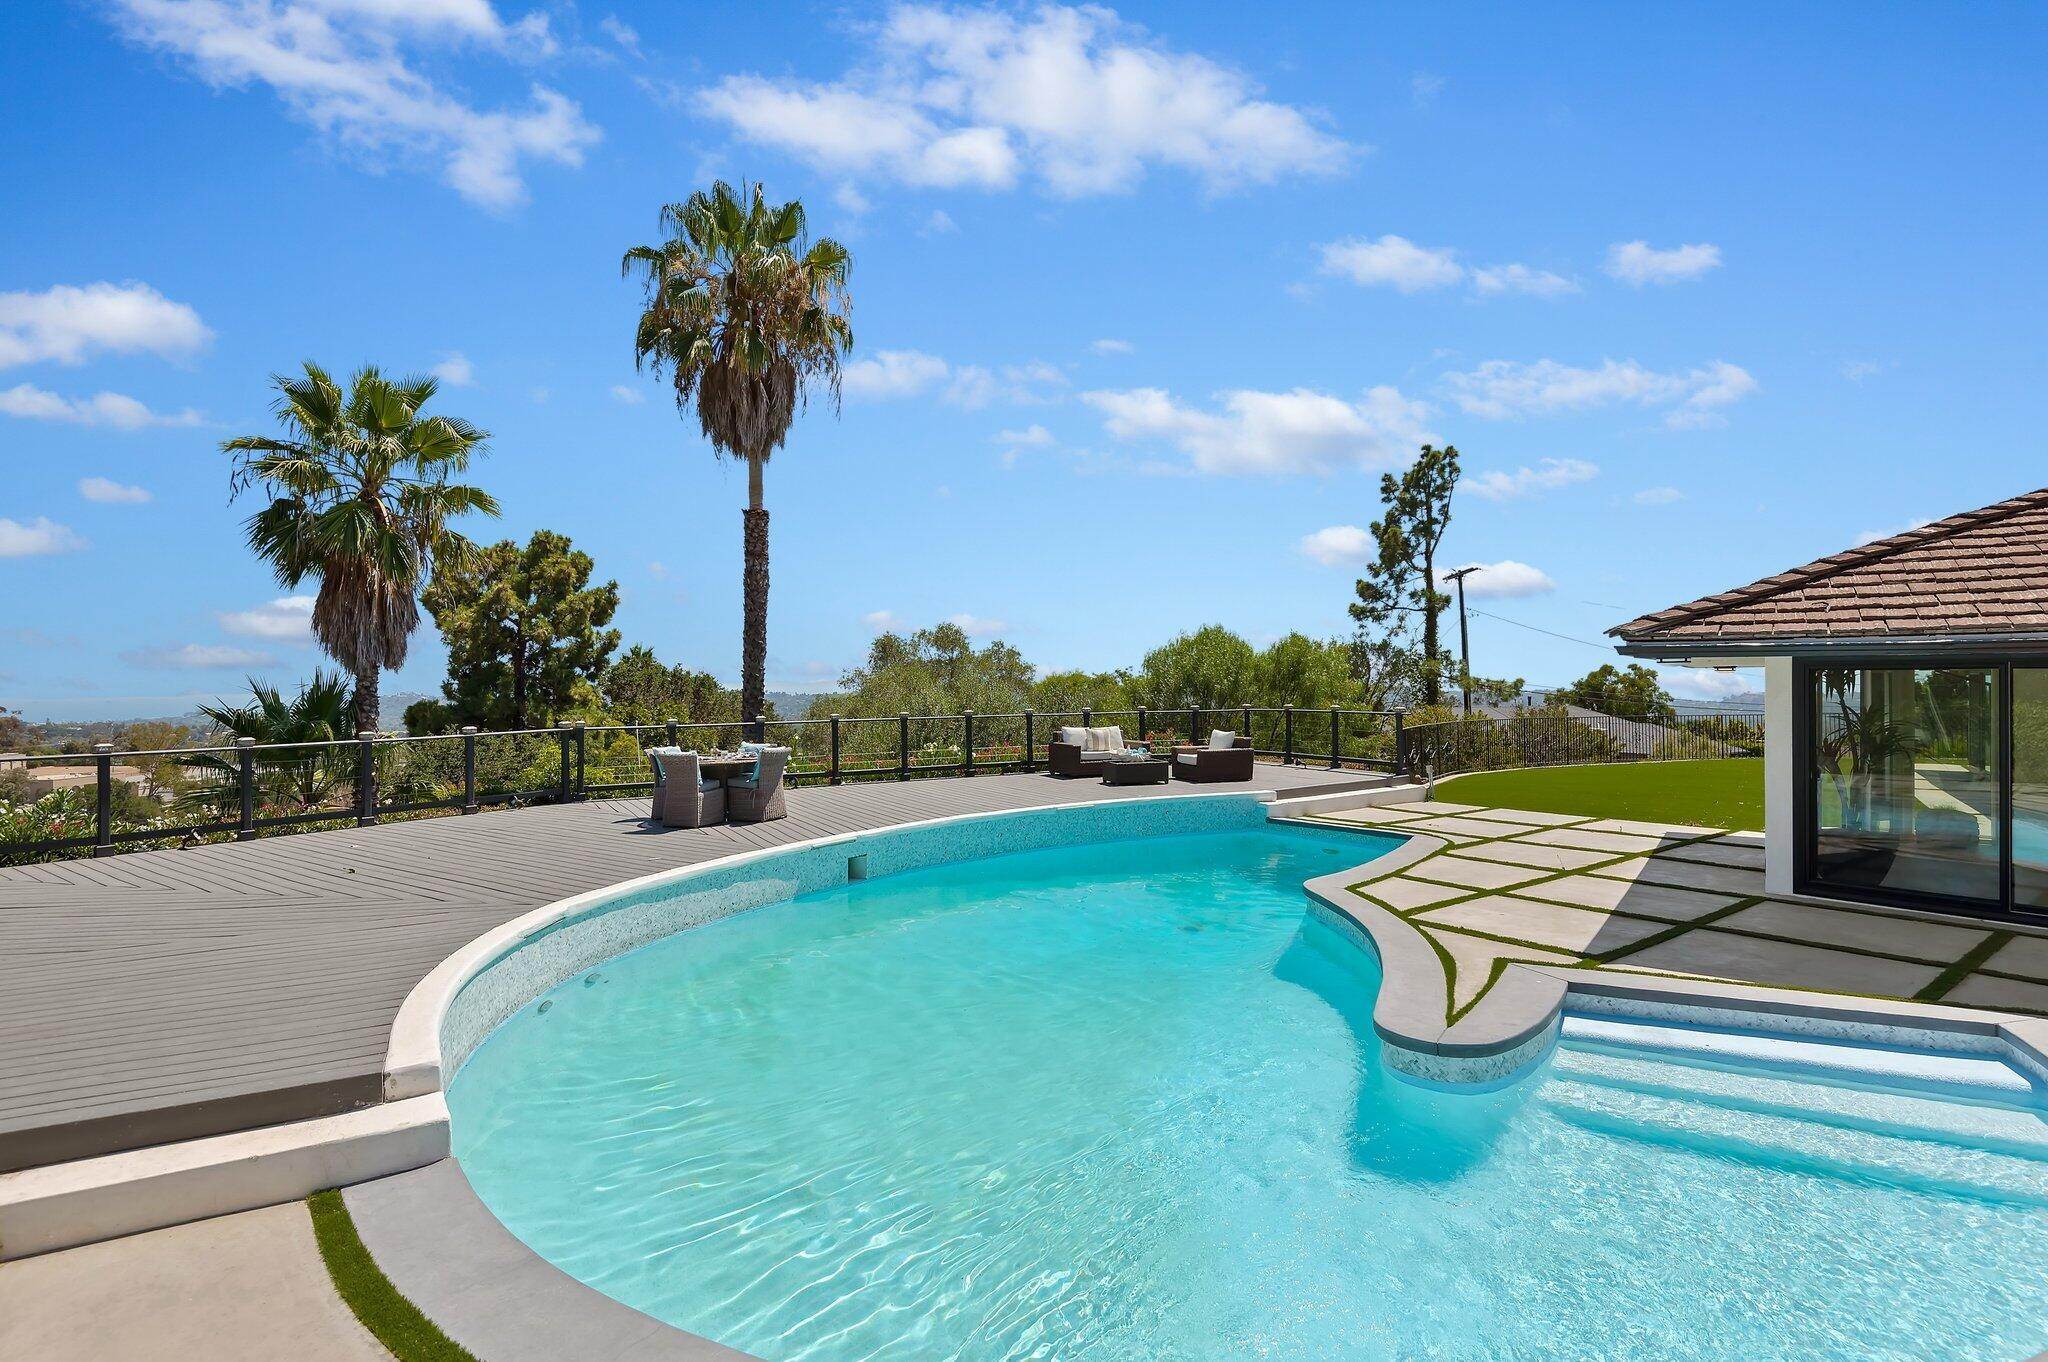 19. Estate for Sale at 8 Celine Drive Santa Barbara, California 93105 United States